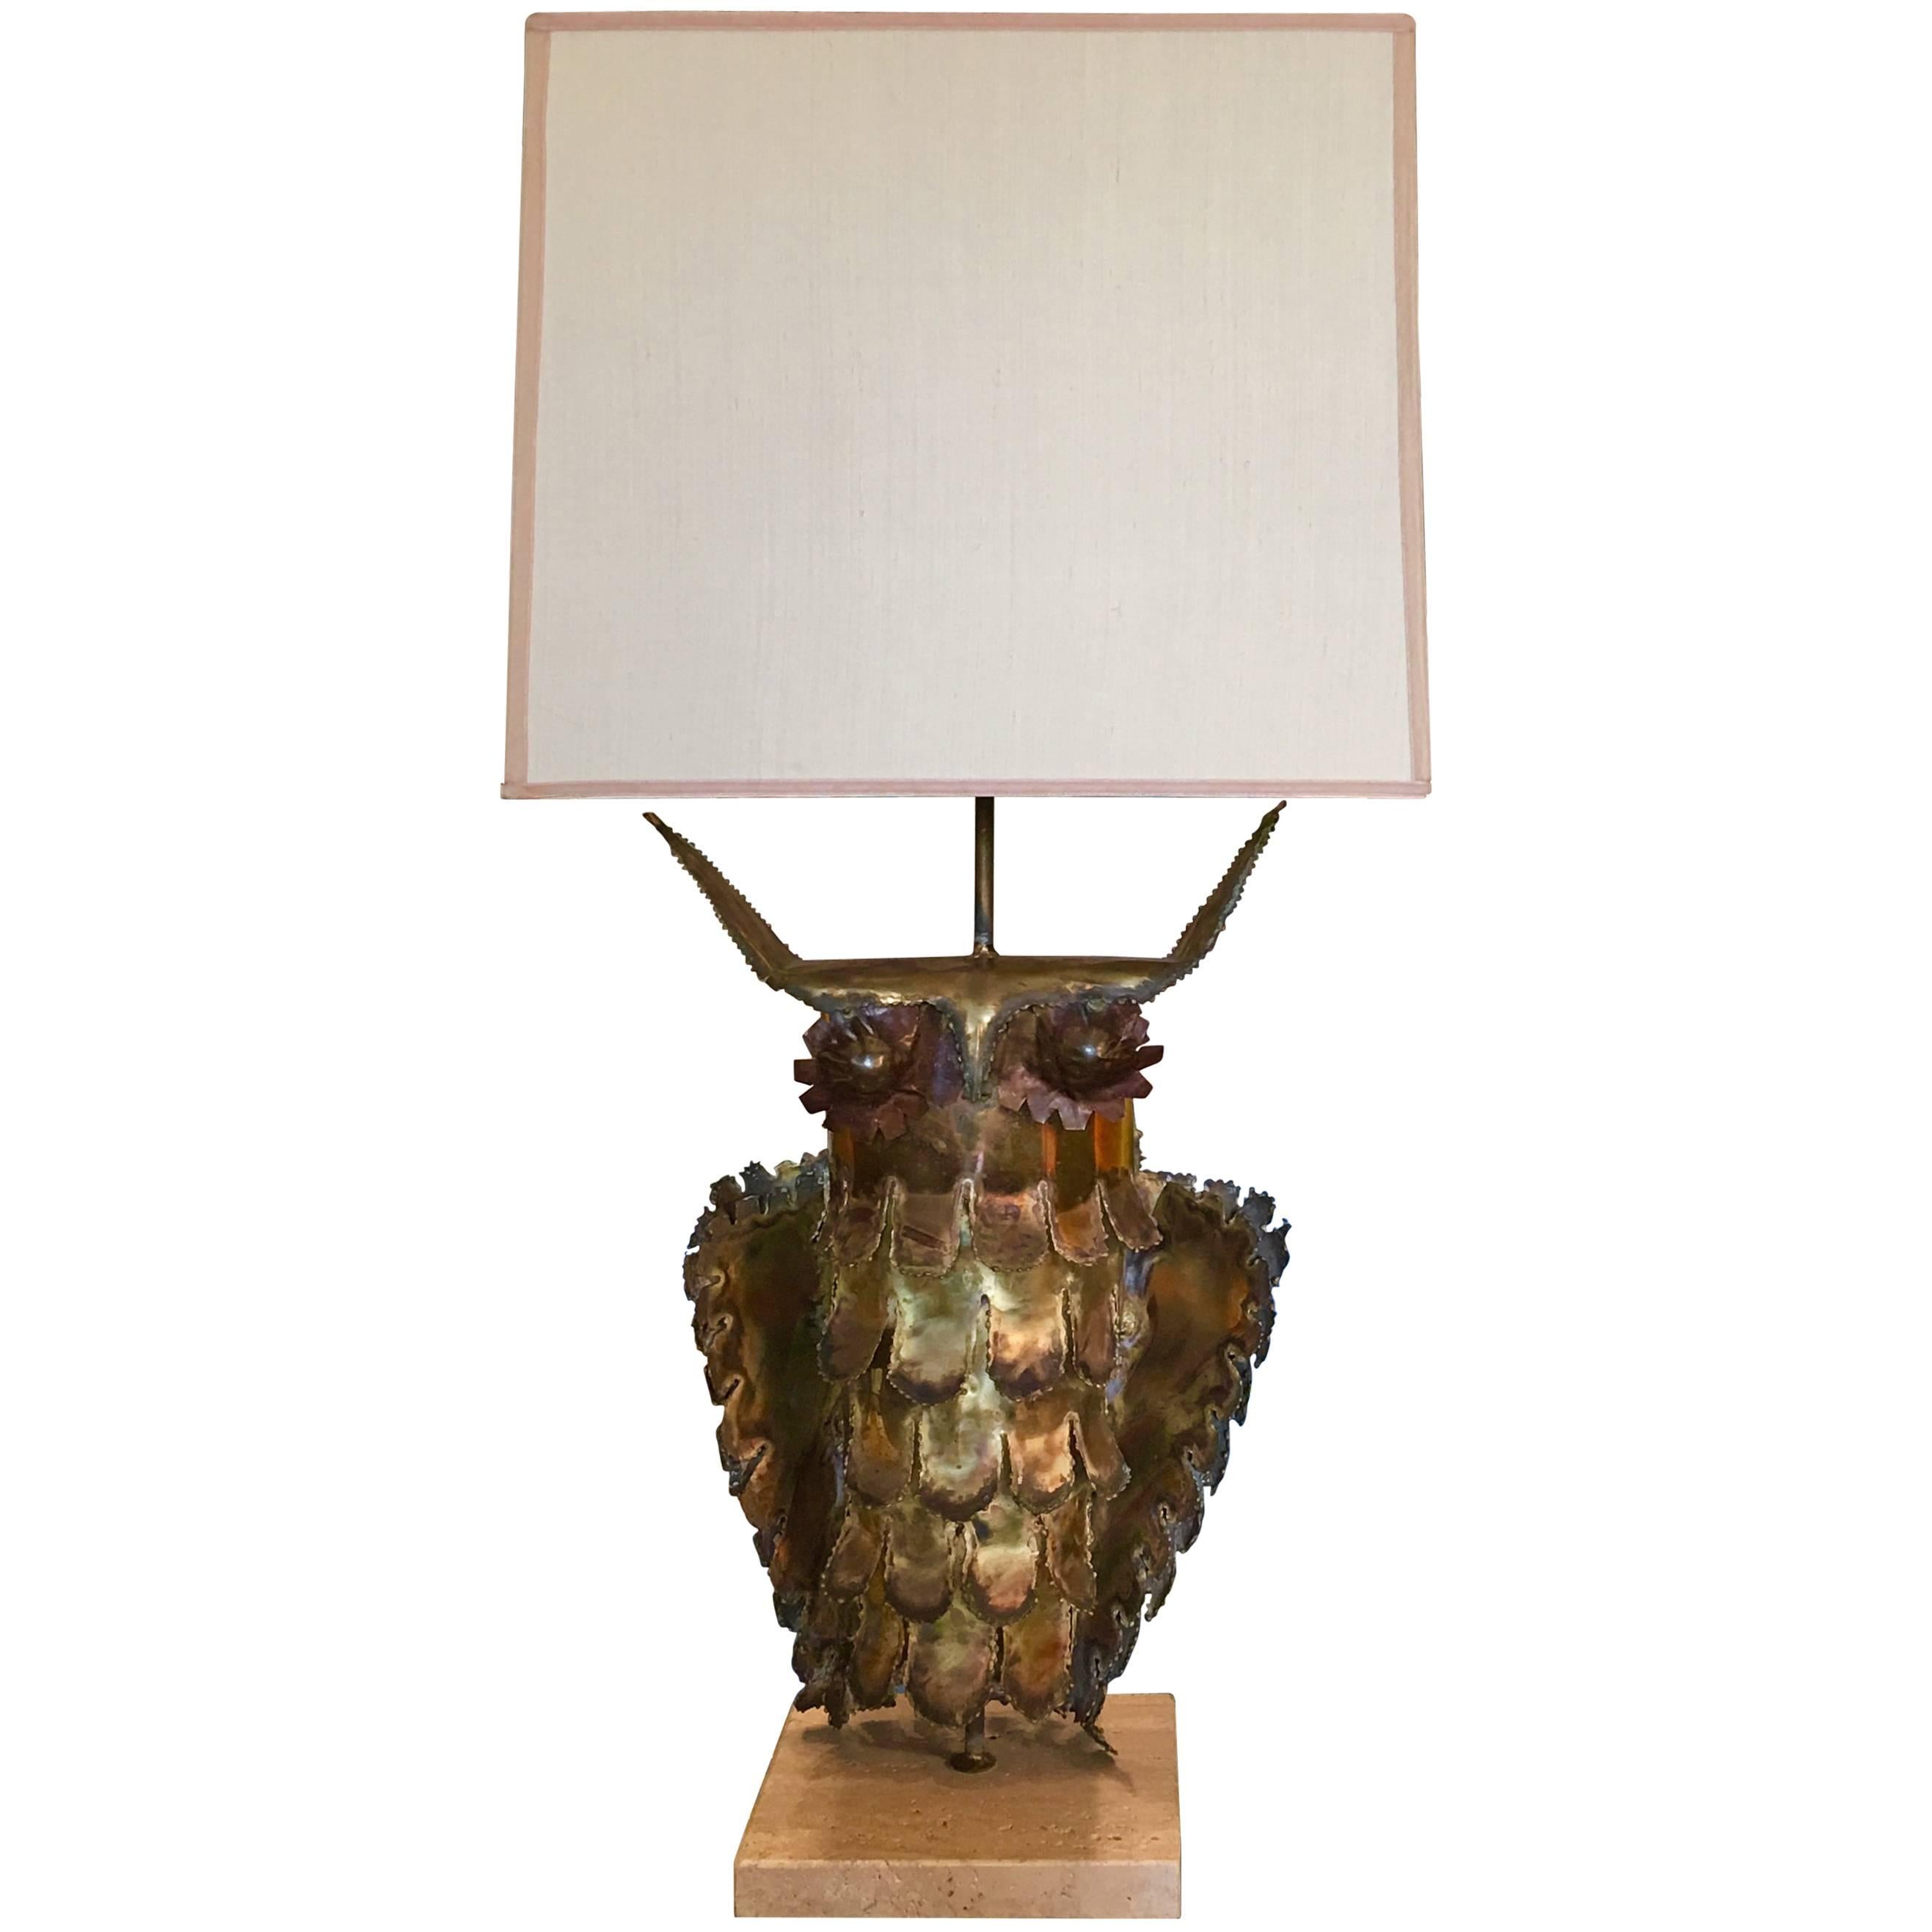 Curtis Jere Brutalist Owl Table Lamp